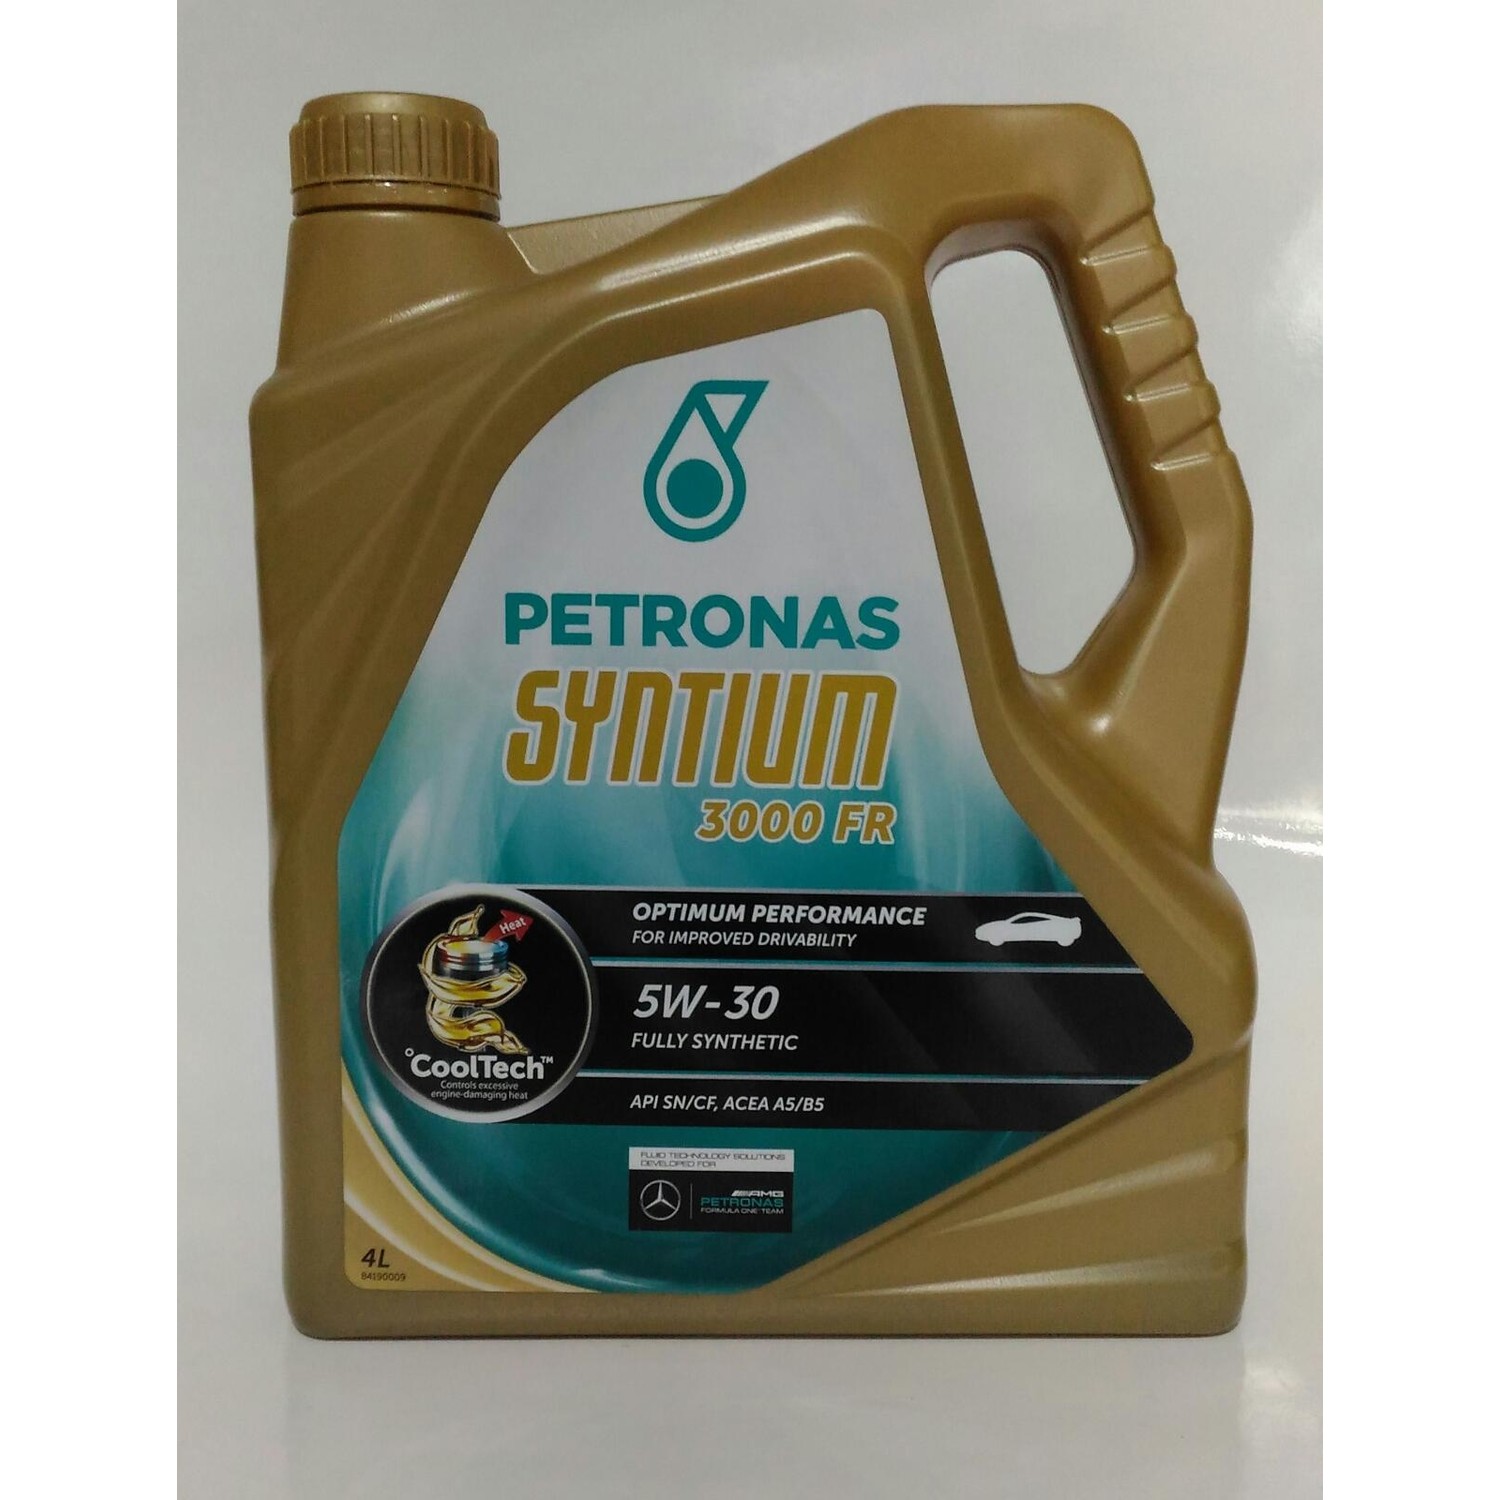 Масло petronas 5w40. Petronas Syntium 3000 e 5w40. Petronas моторное масло 5w40 3000av. 70134k1yeu масло моторное синтетическое "Syntium 3000 e 5w-40", 4л. Моторное масло Petronas Syntium 3000 e 5w40.